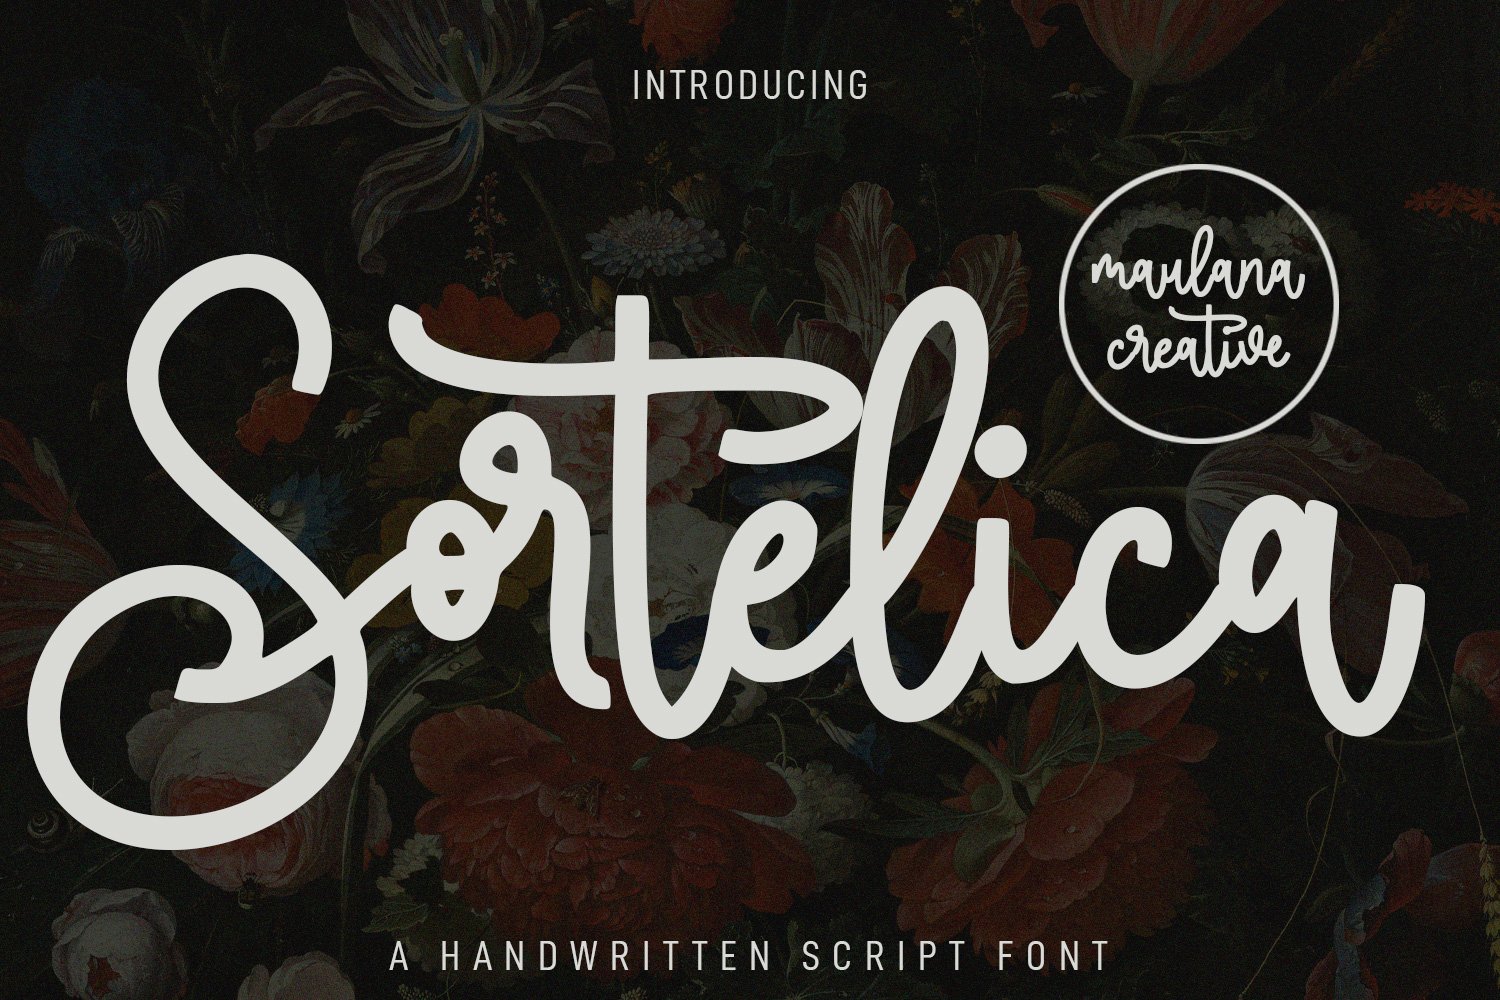 Sortelica Script Font cover image.